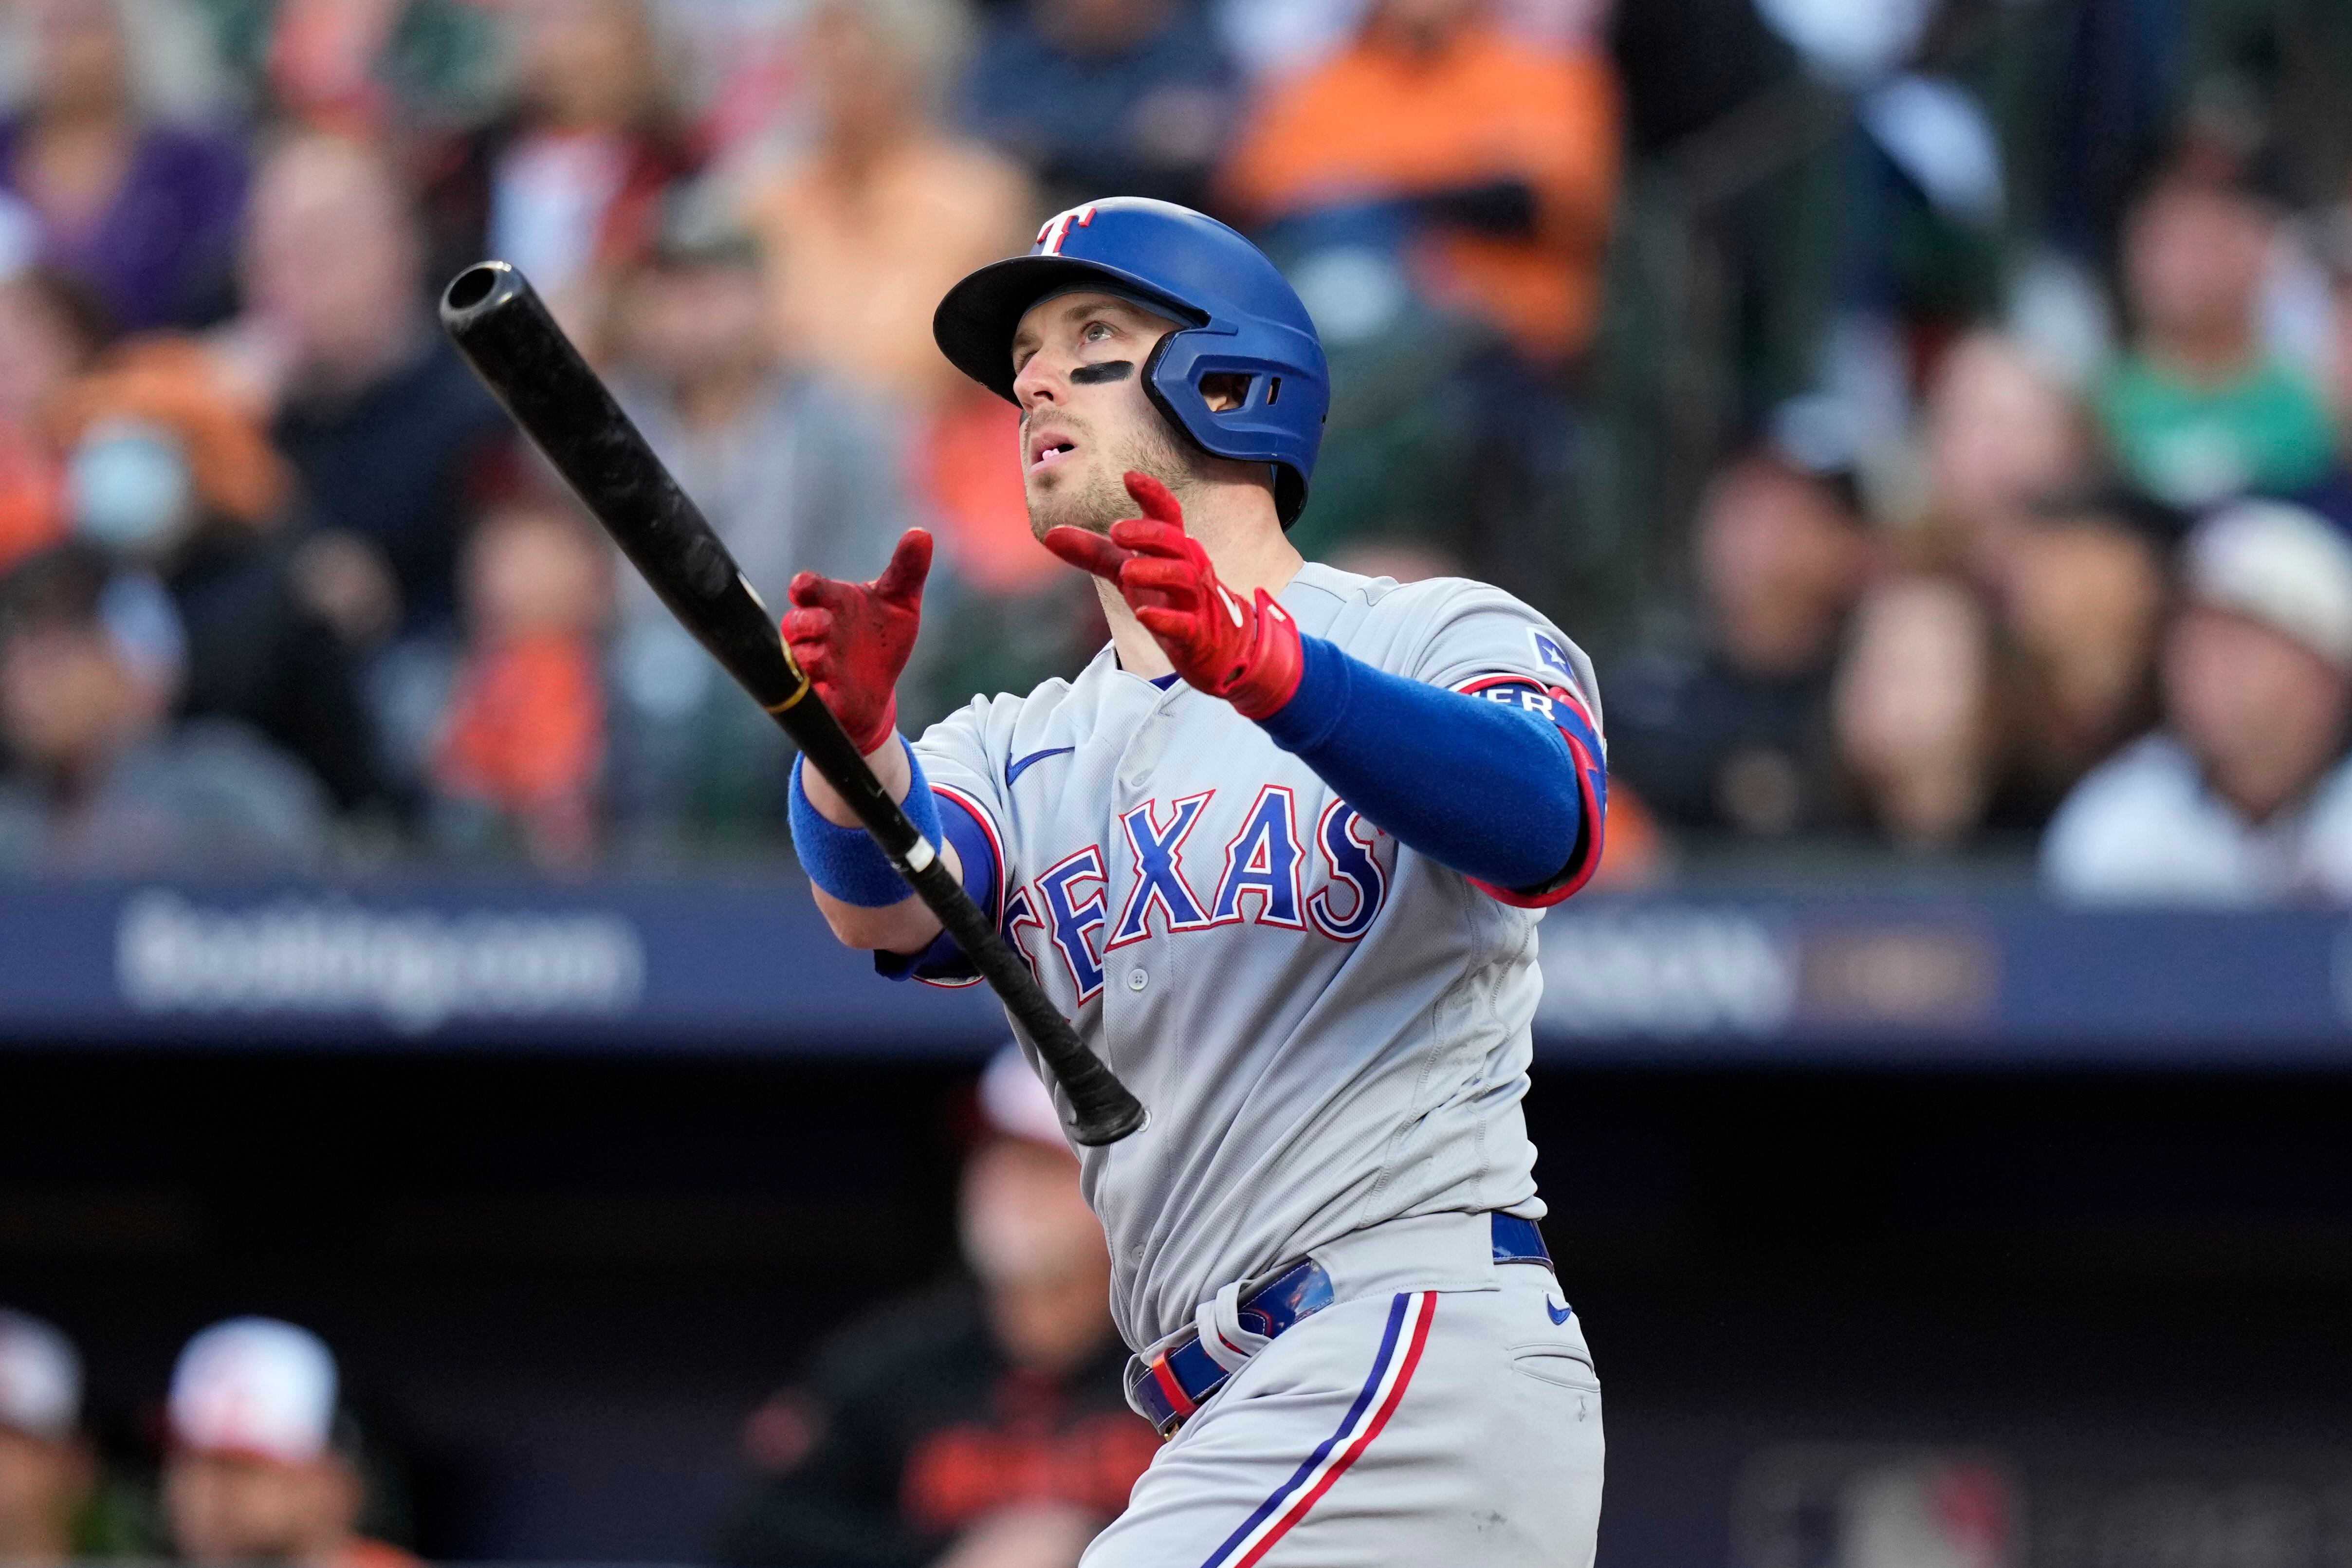 Nine-run inning from Texas eliminates Hurricanes baseball from